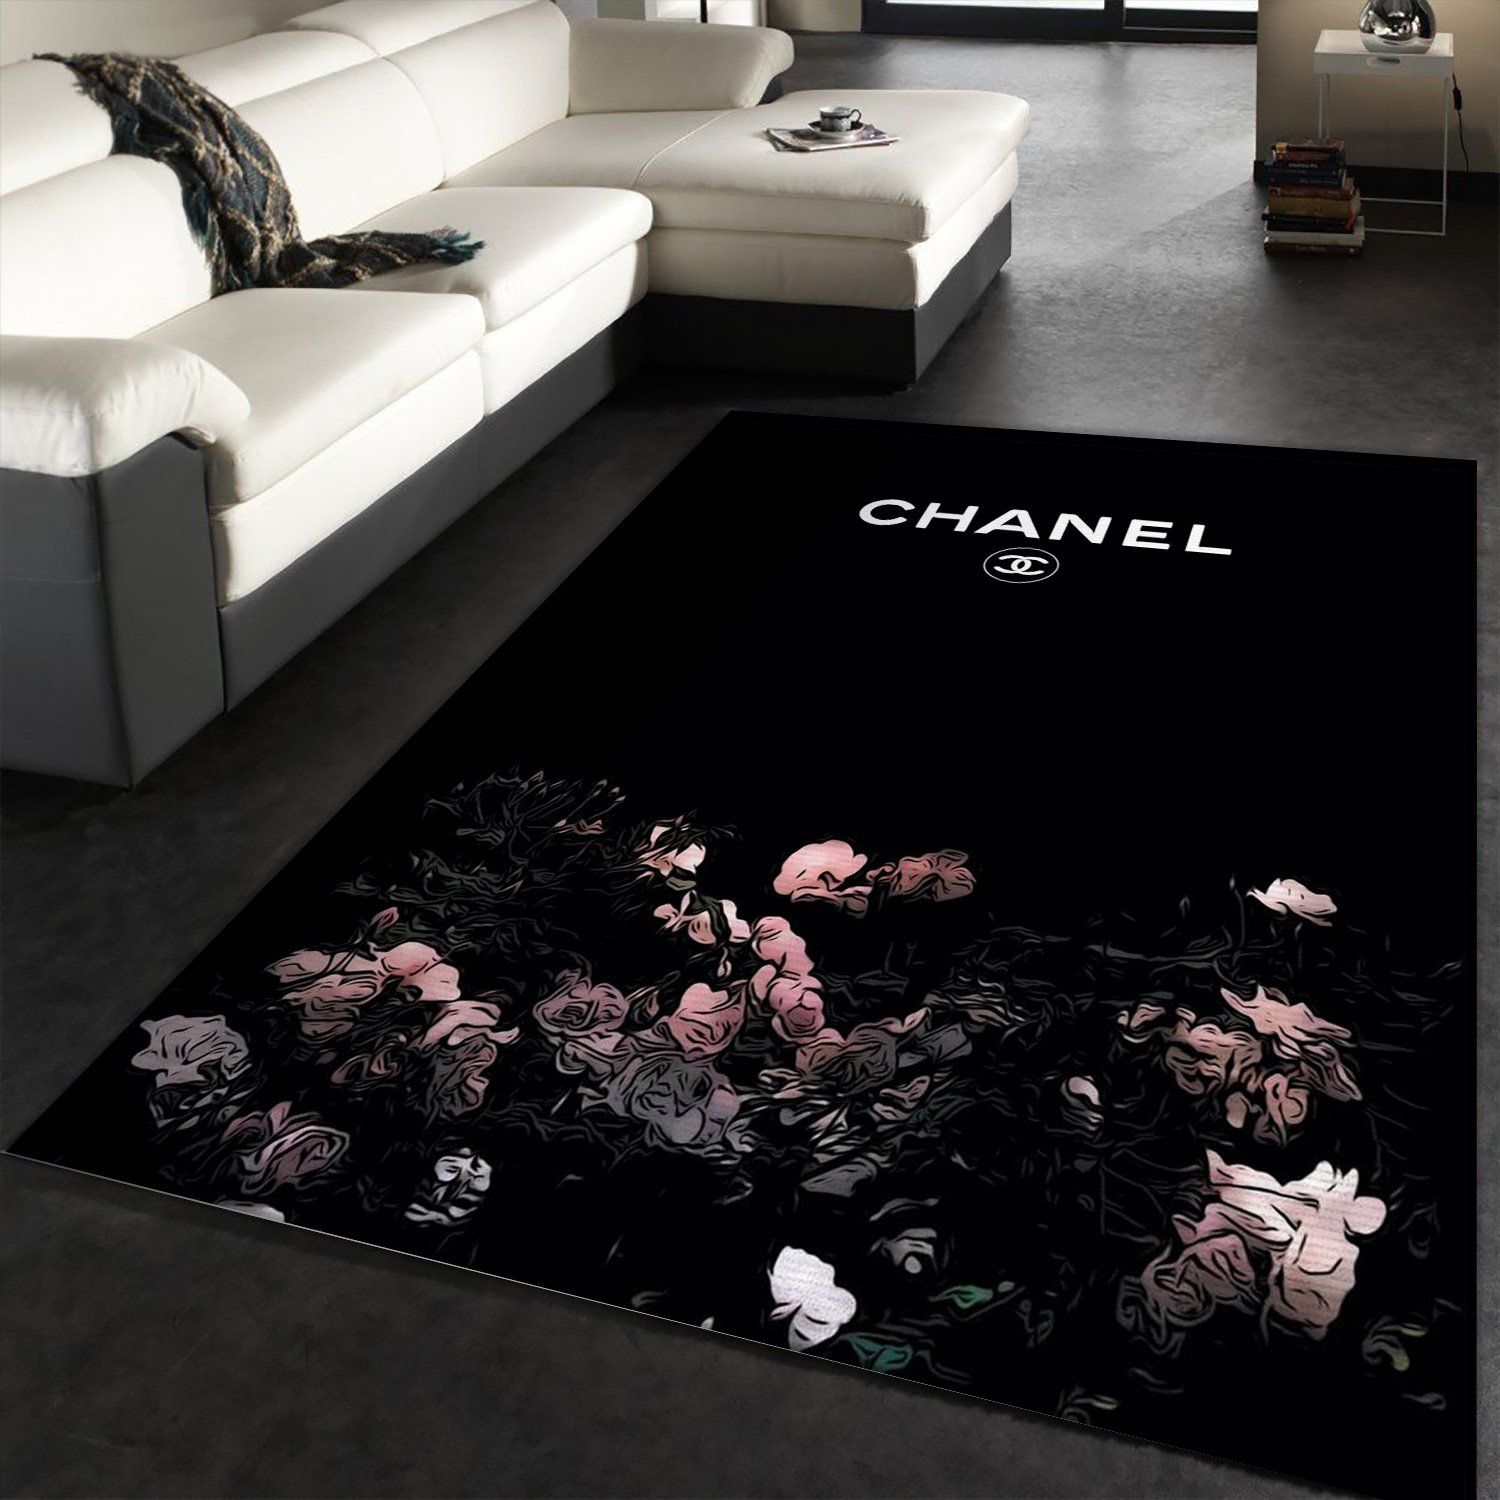 DIY Chanel inspired bathroom rug 